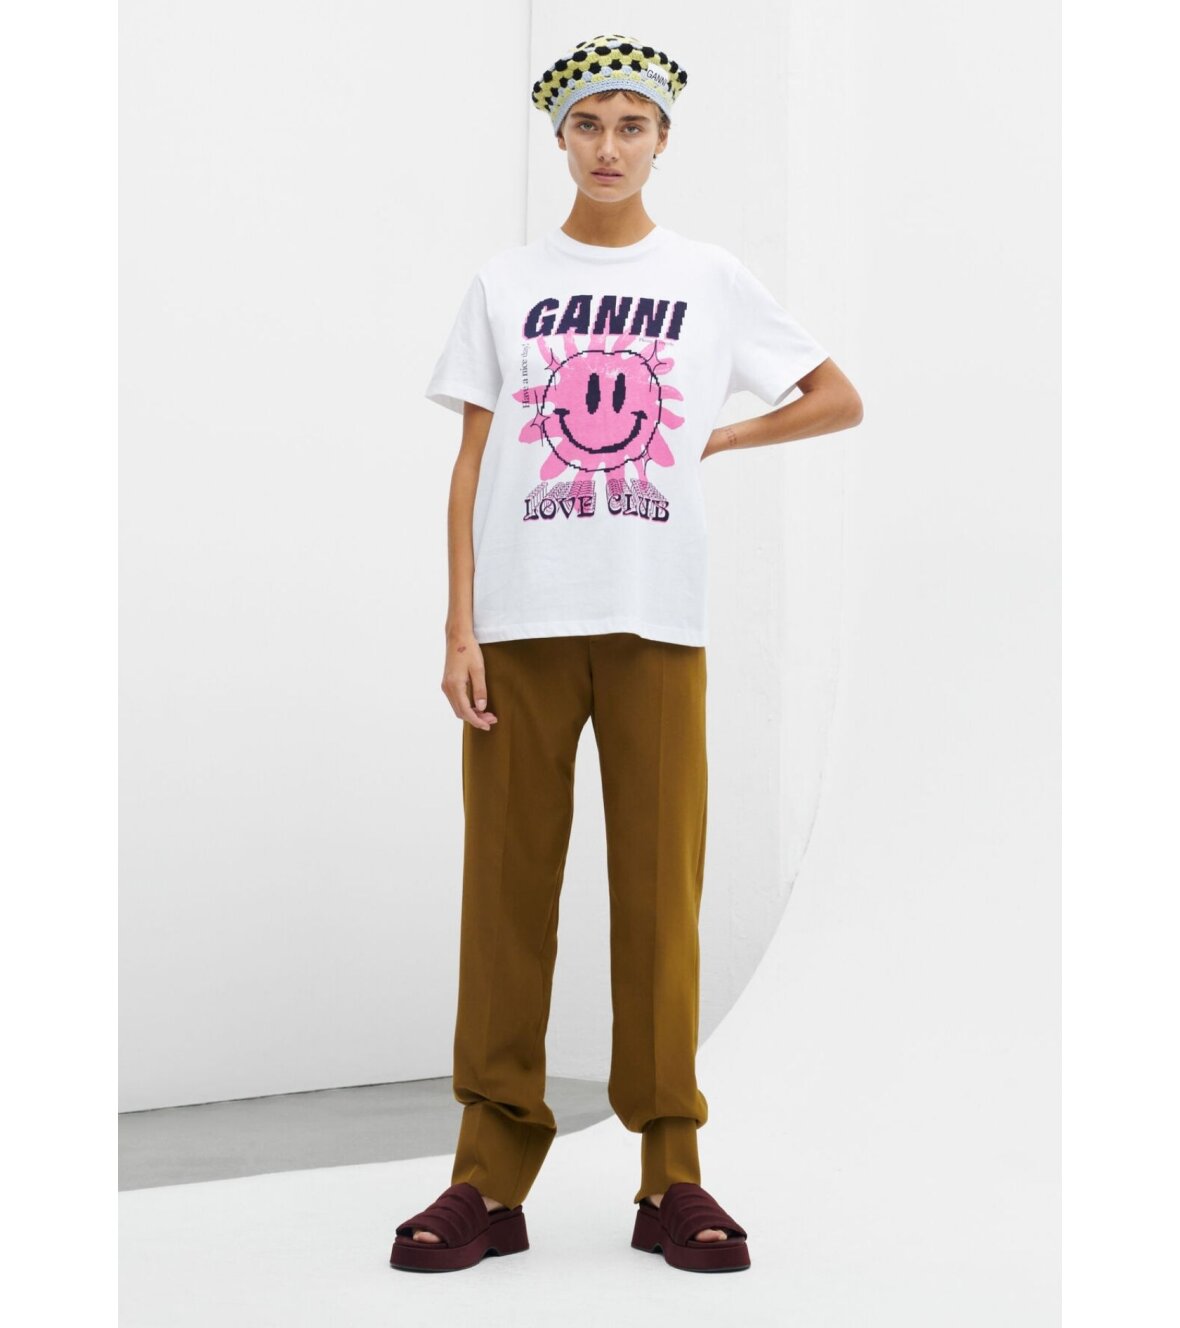 Almægtig krak føderation dr. Adams - Ganni Love Club T-shirt Bright White/Pink